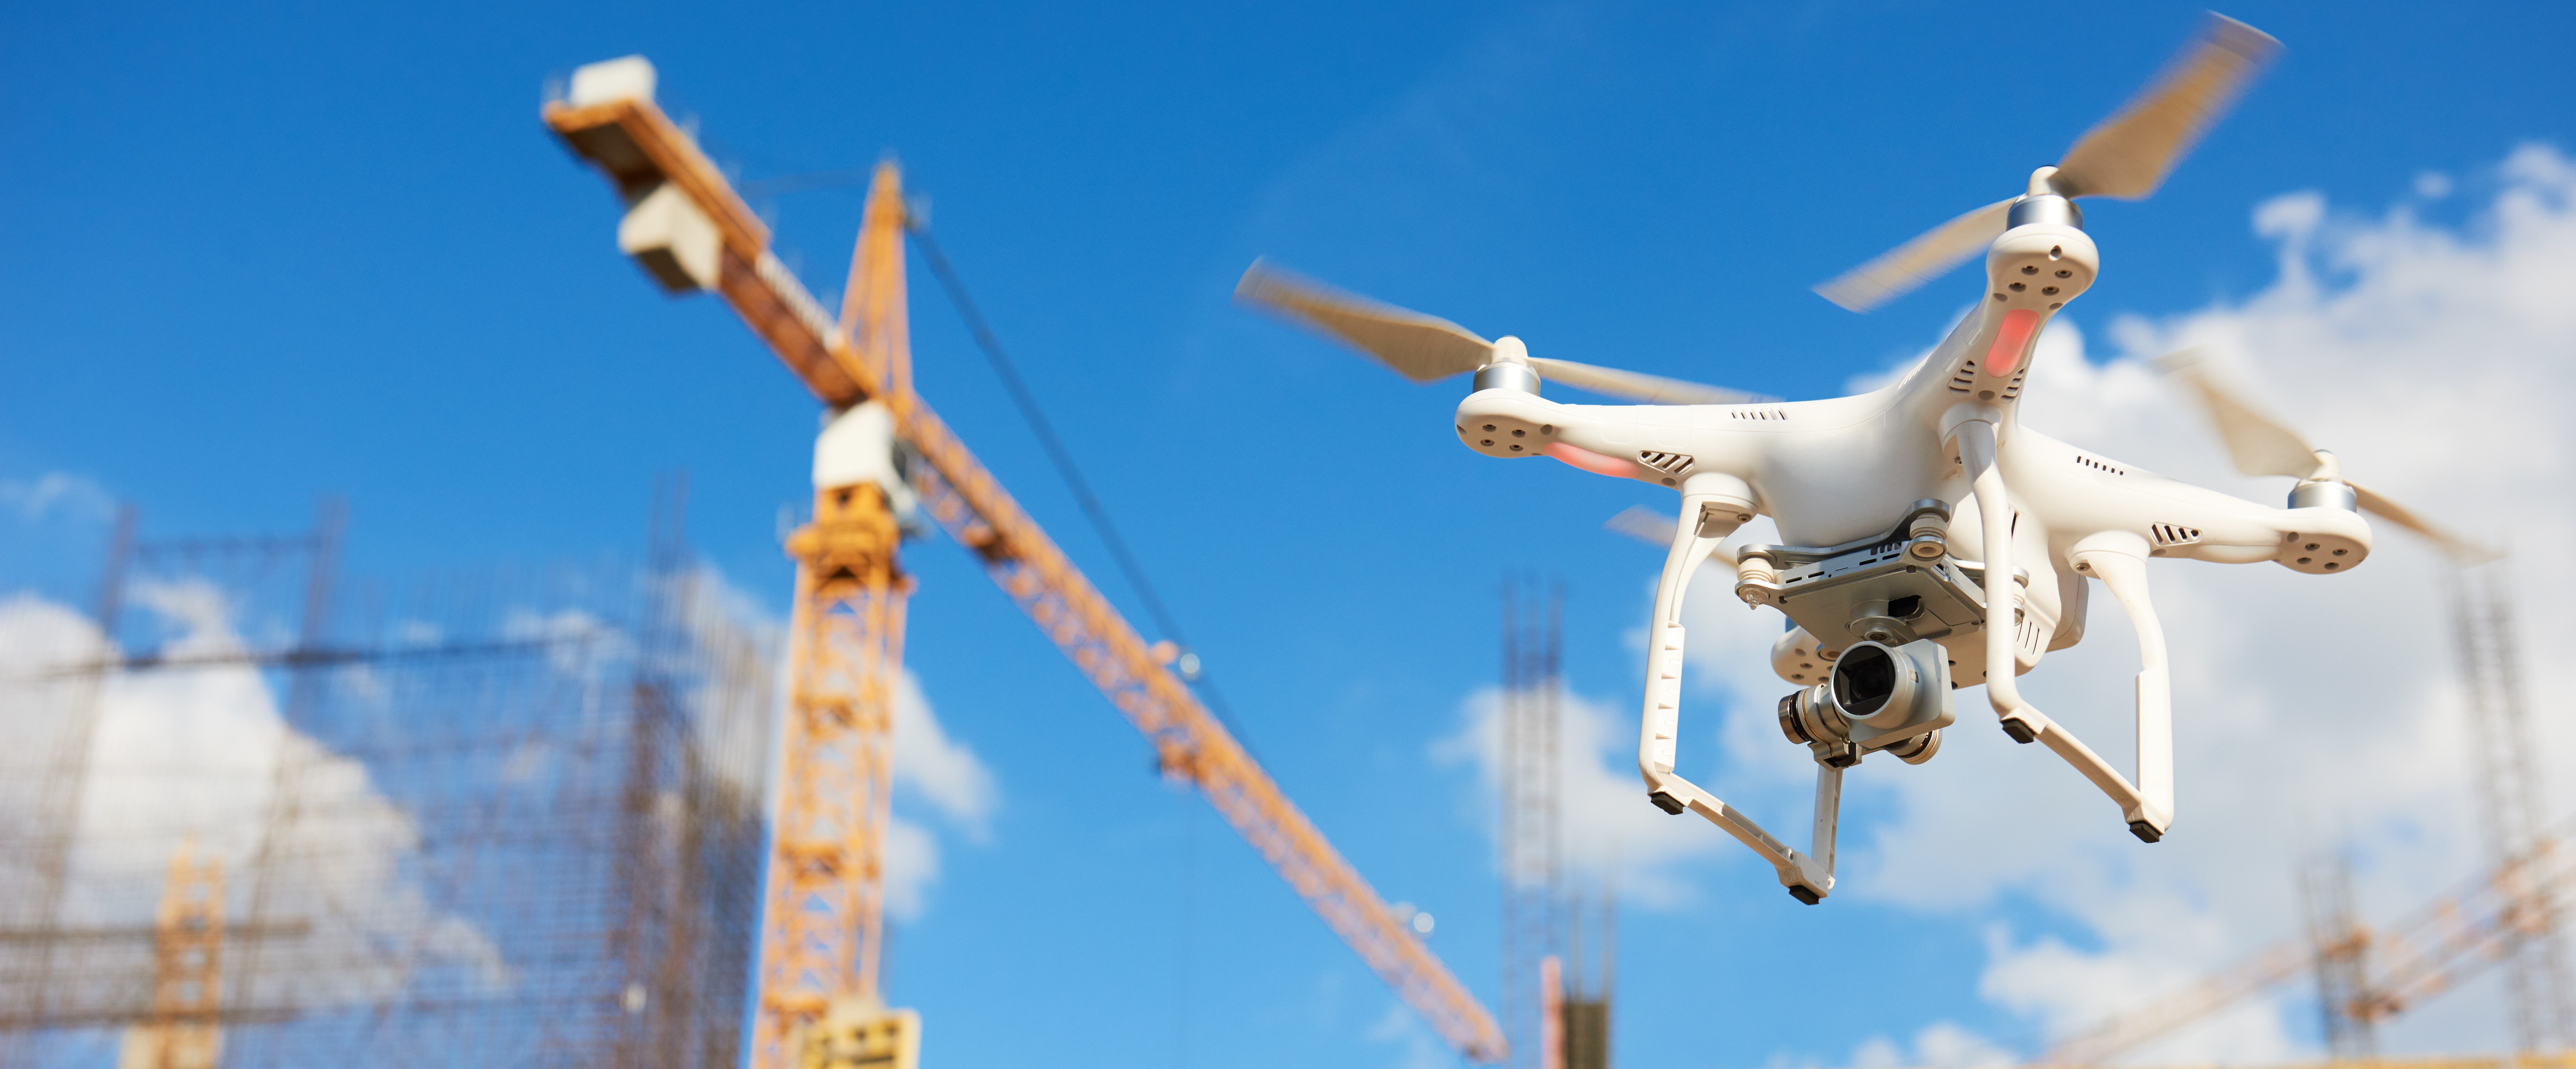 Drones in Construction